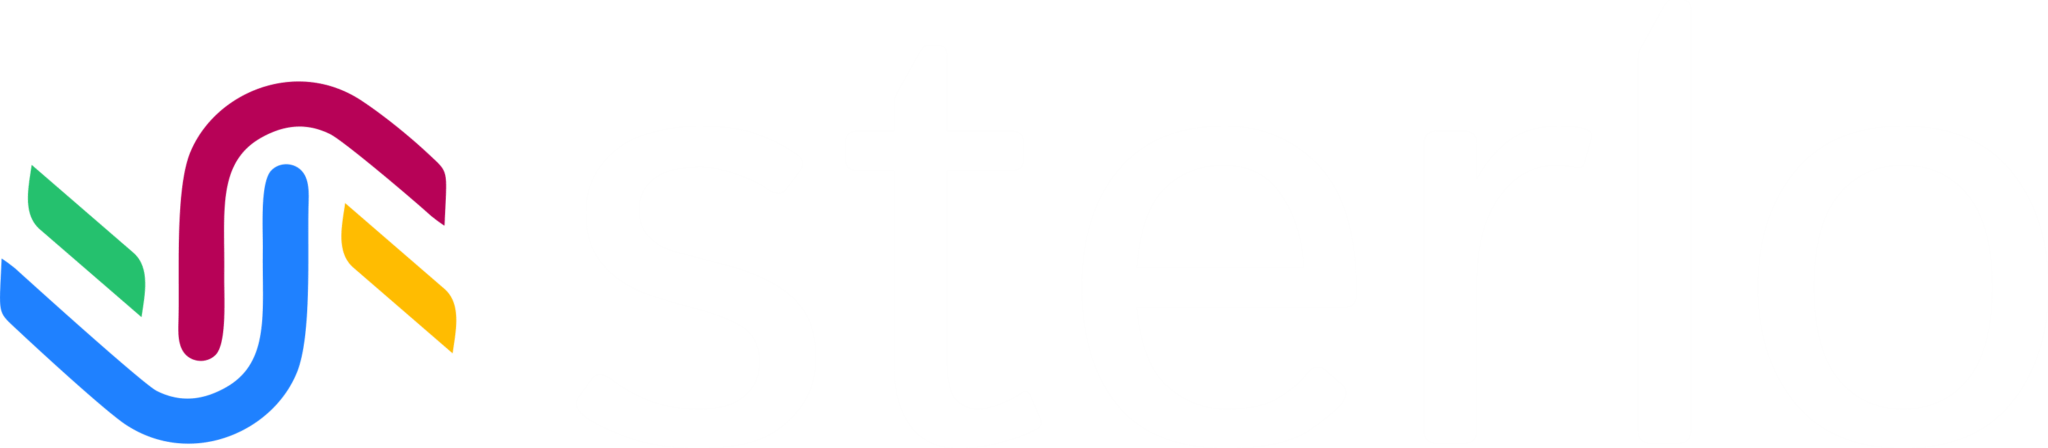 sterlo-logo-colorWhite-2-2048x448